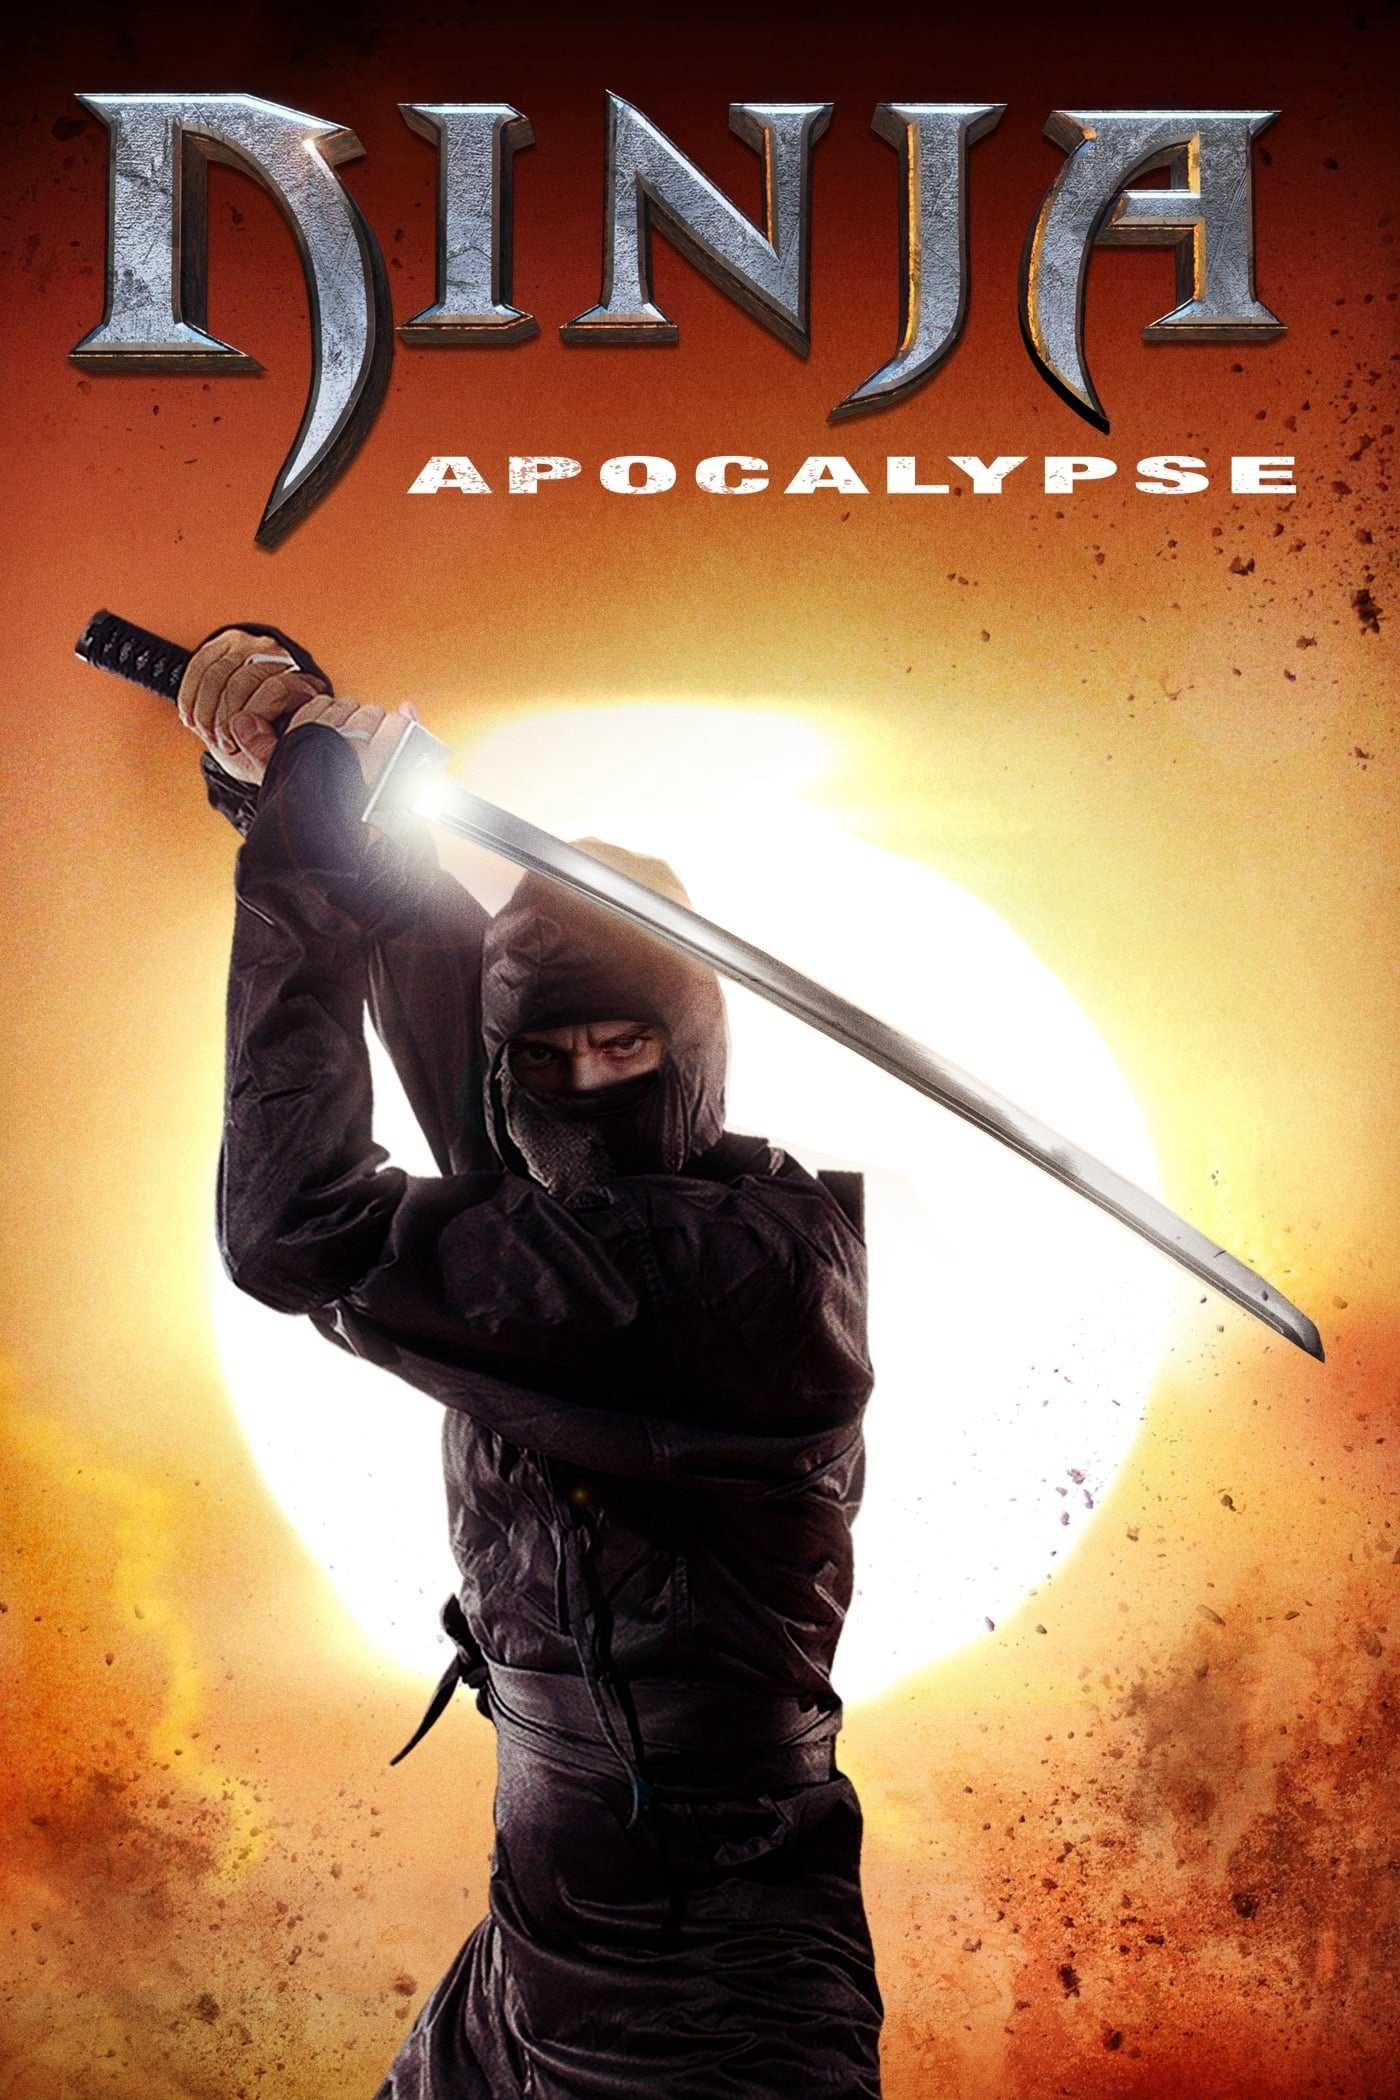 Thị tộc nhẫn giả - Ninja apocalypse